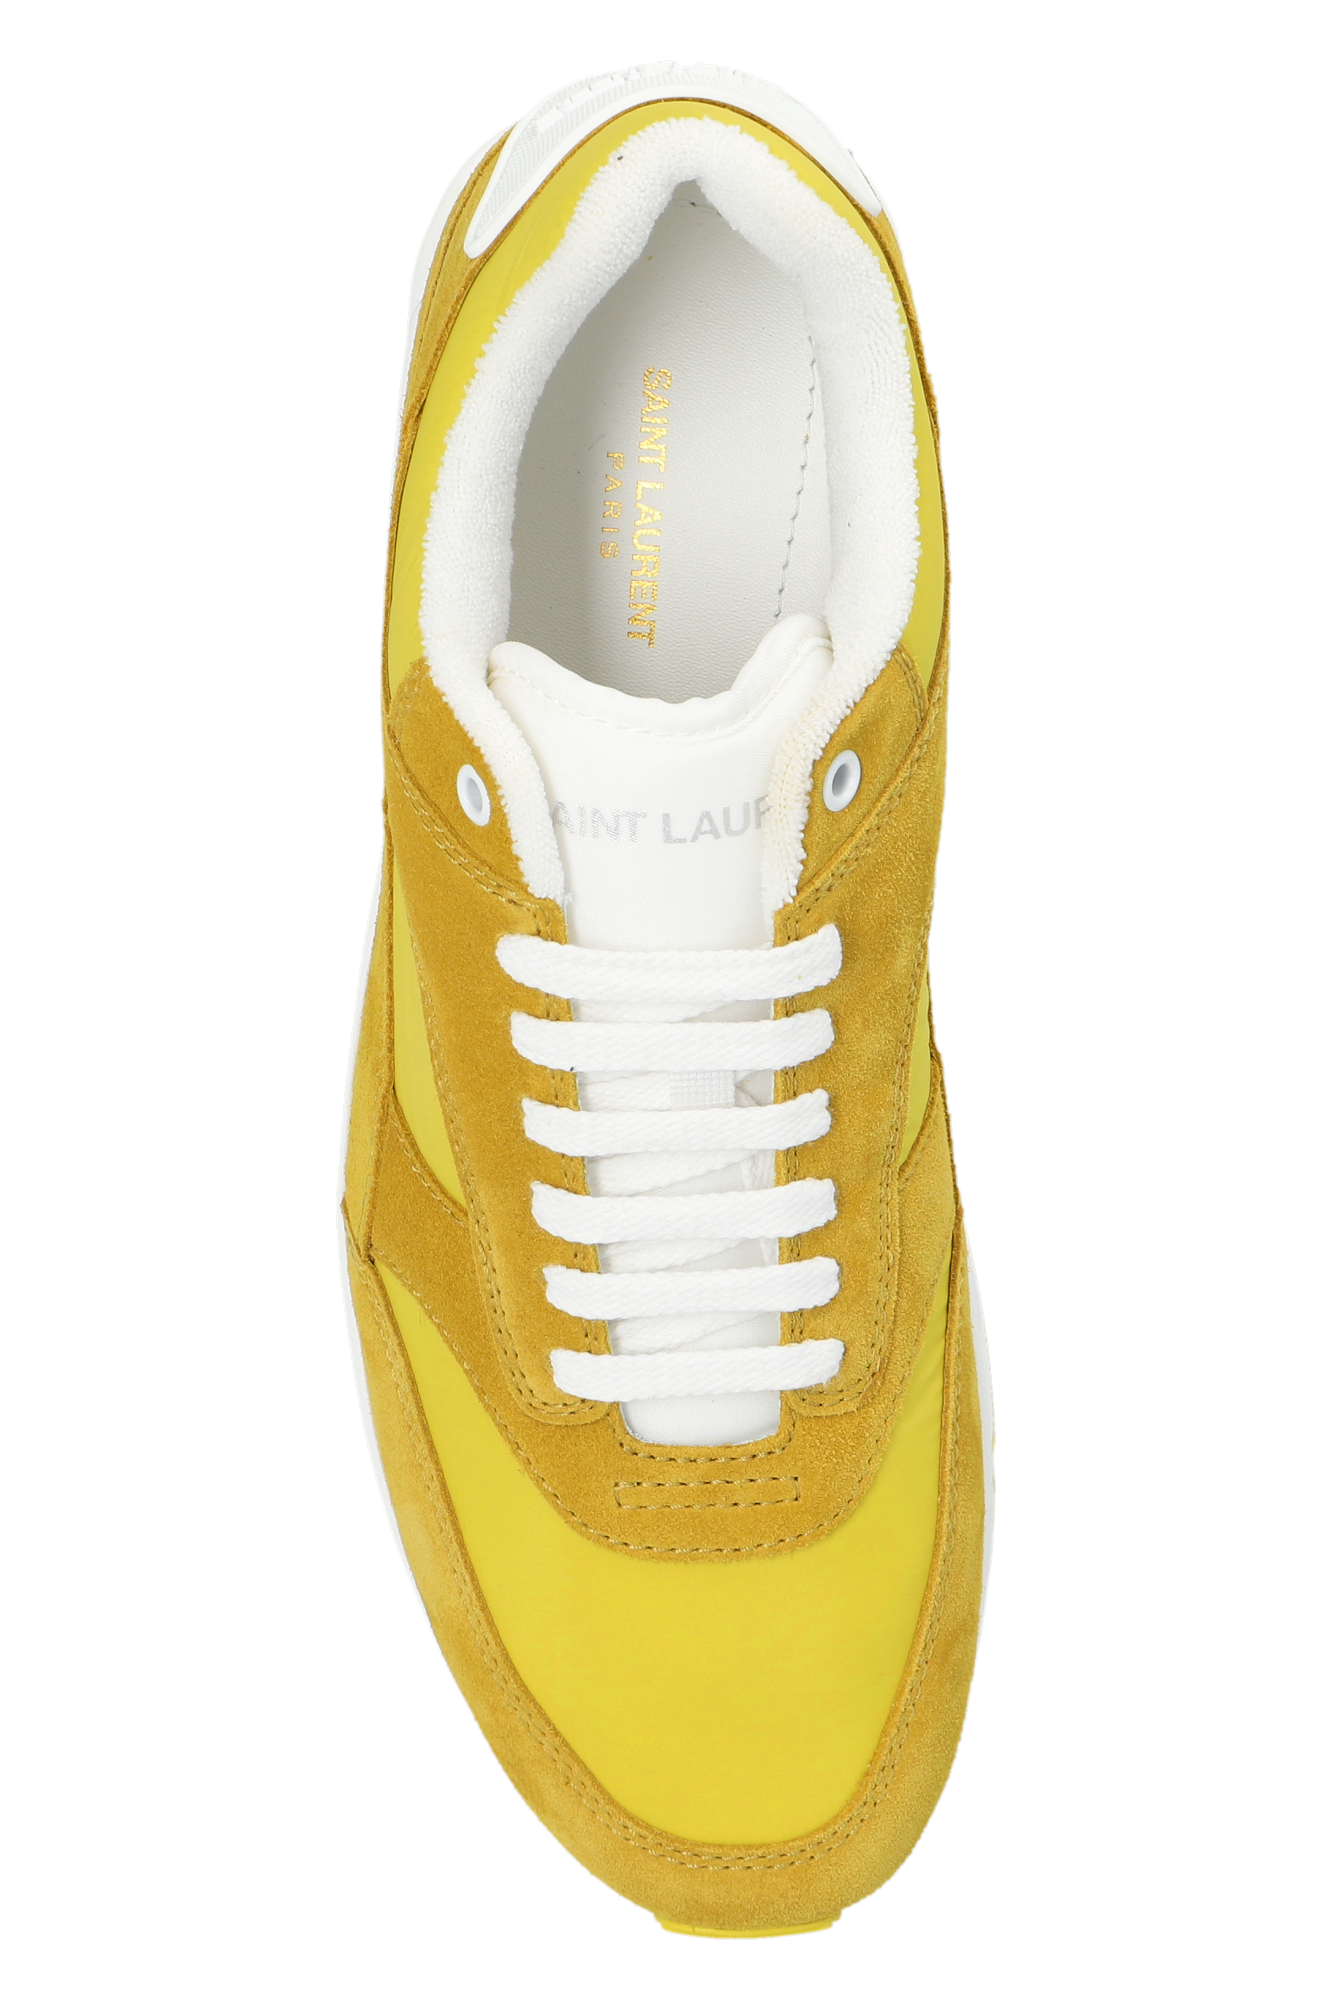 Saint Laurent Sneakers with logo